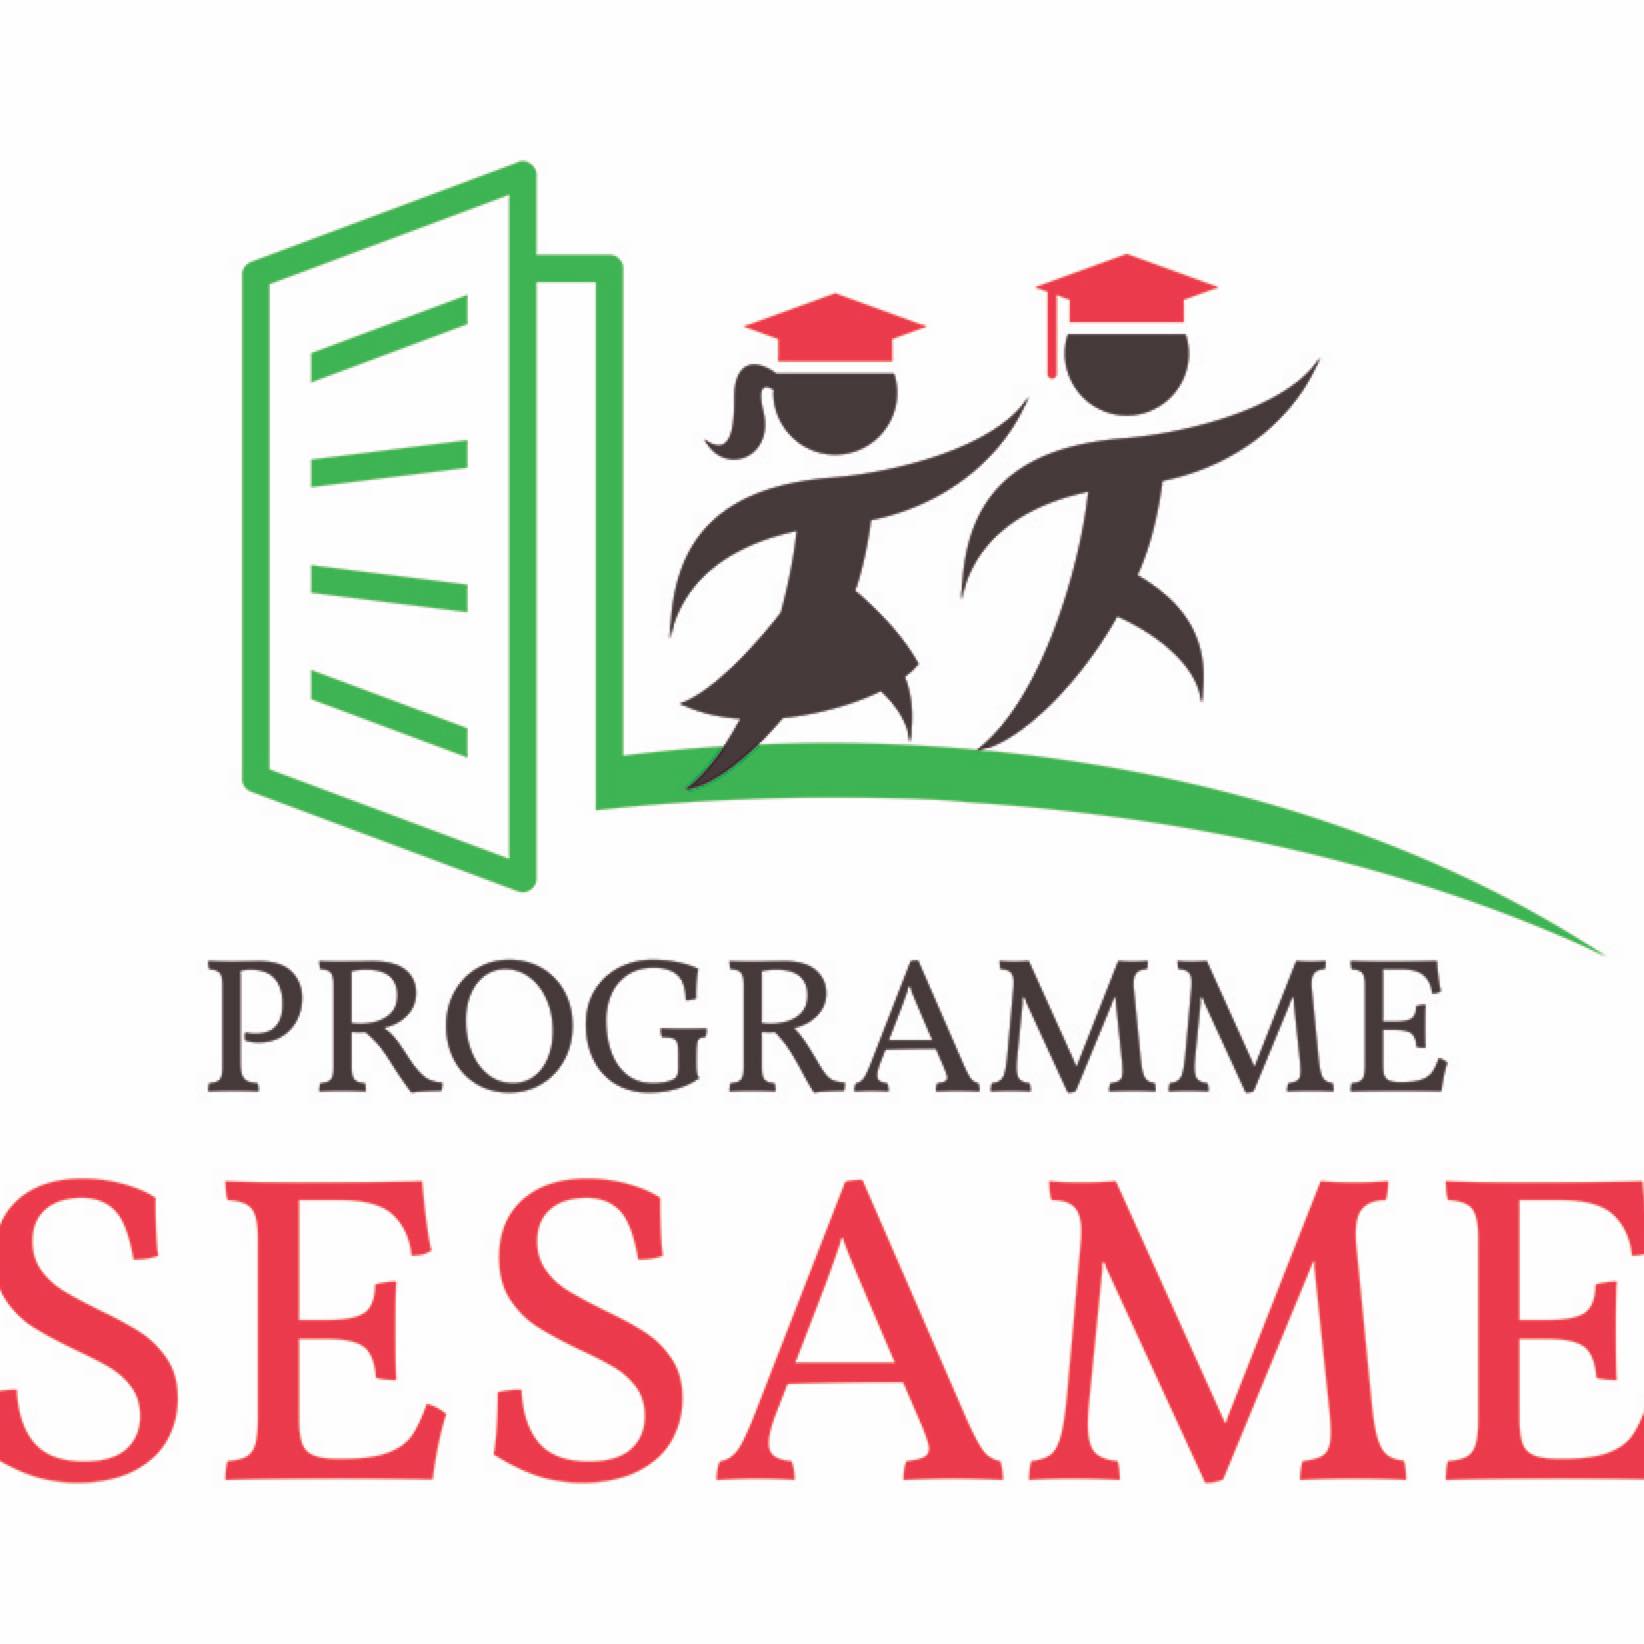 Programme SESAME